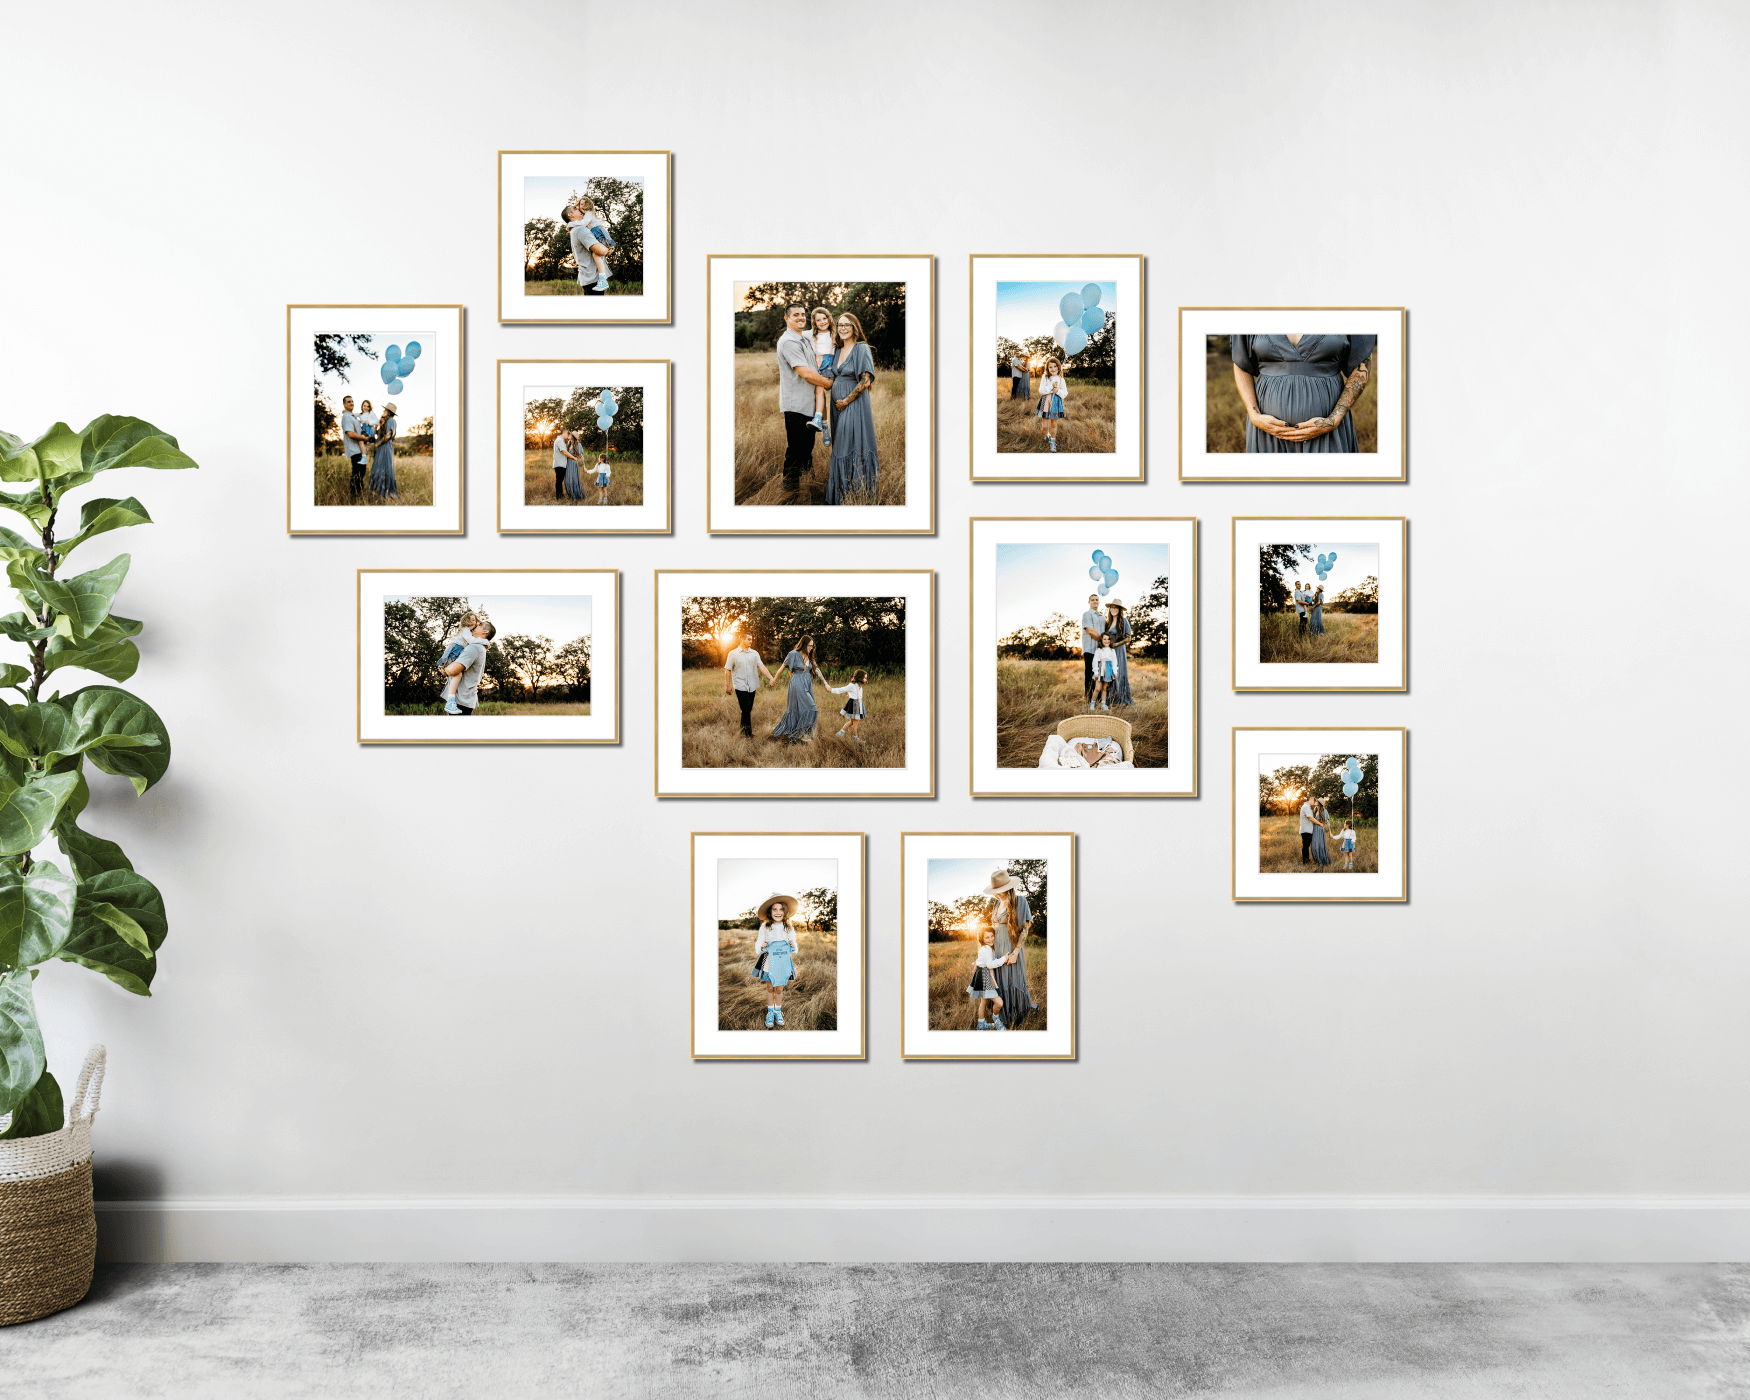 64" x 52" Gallery Wall Metal Frame (Set of 13)